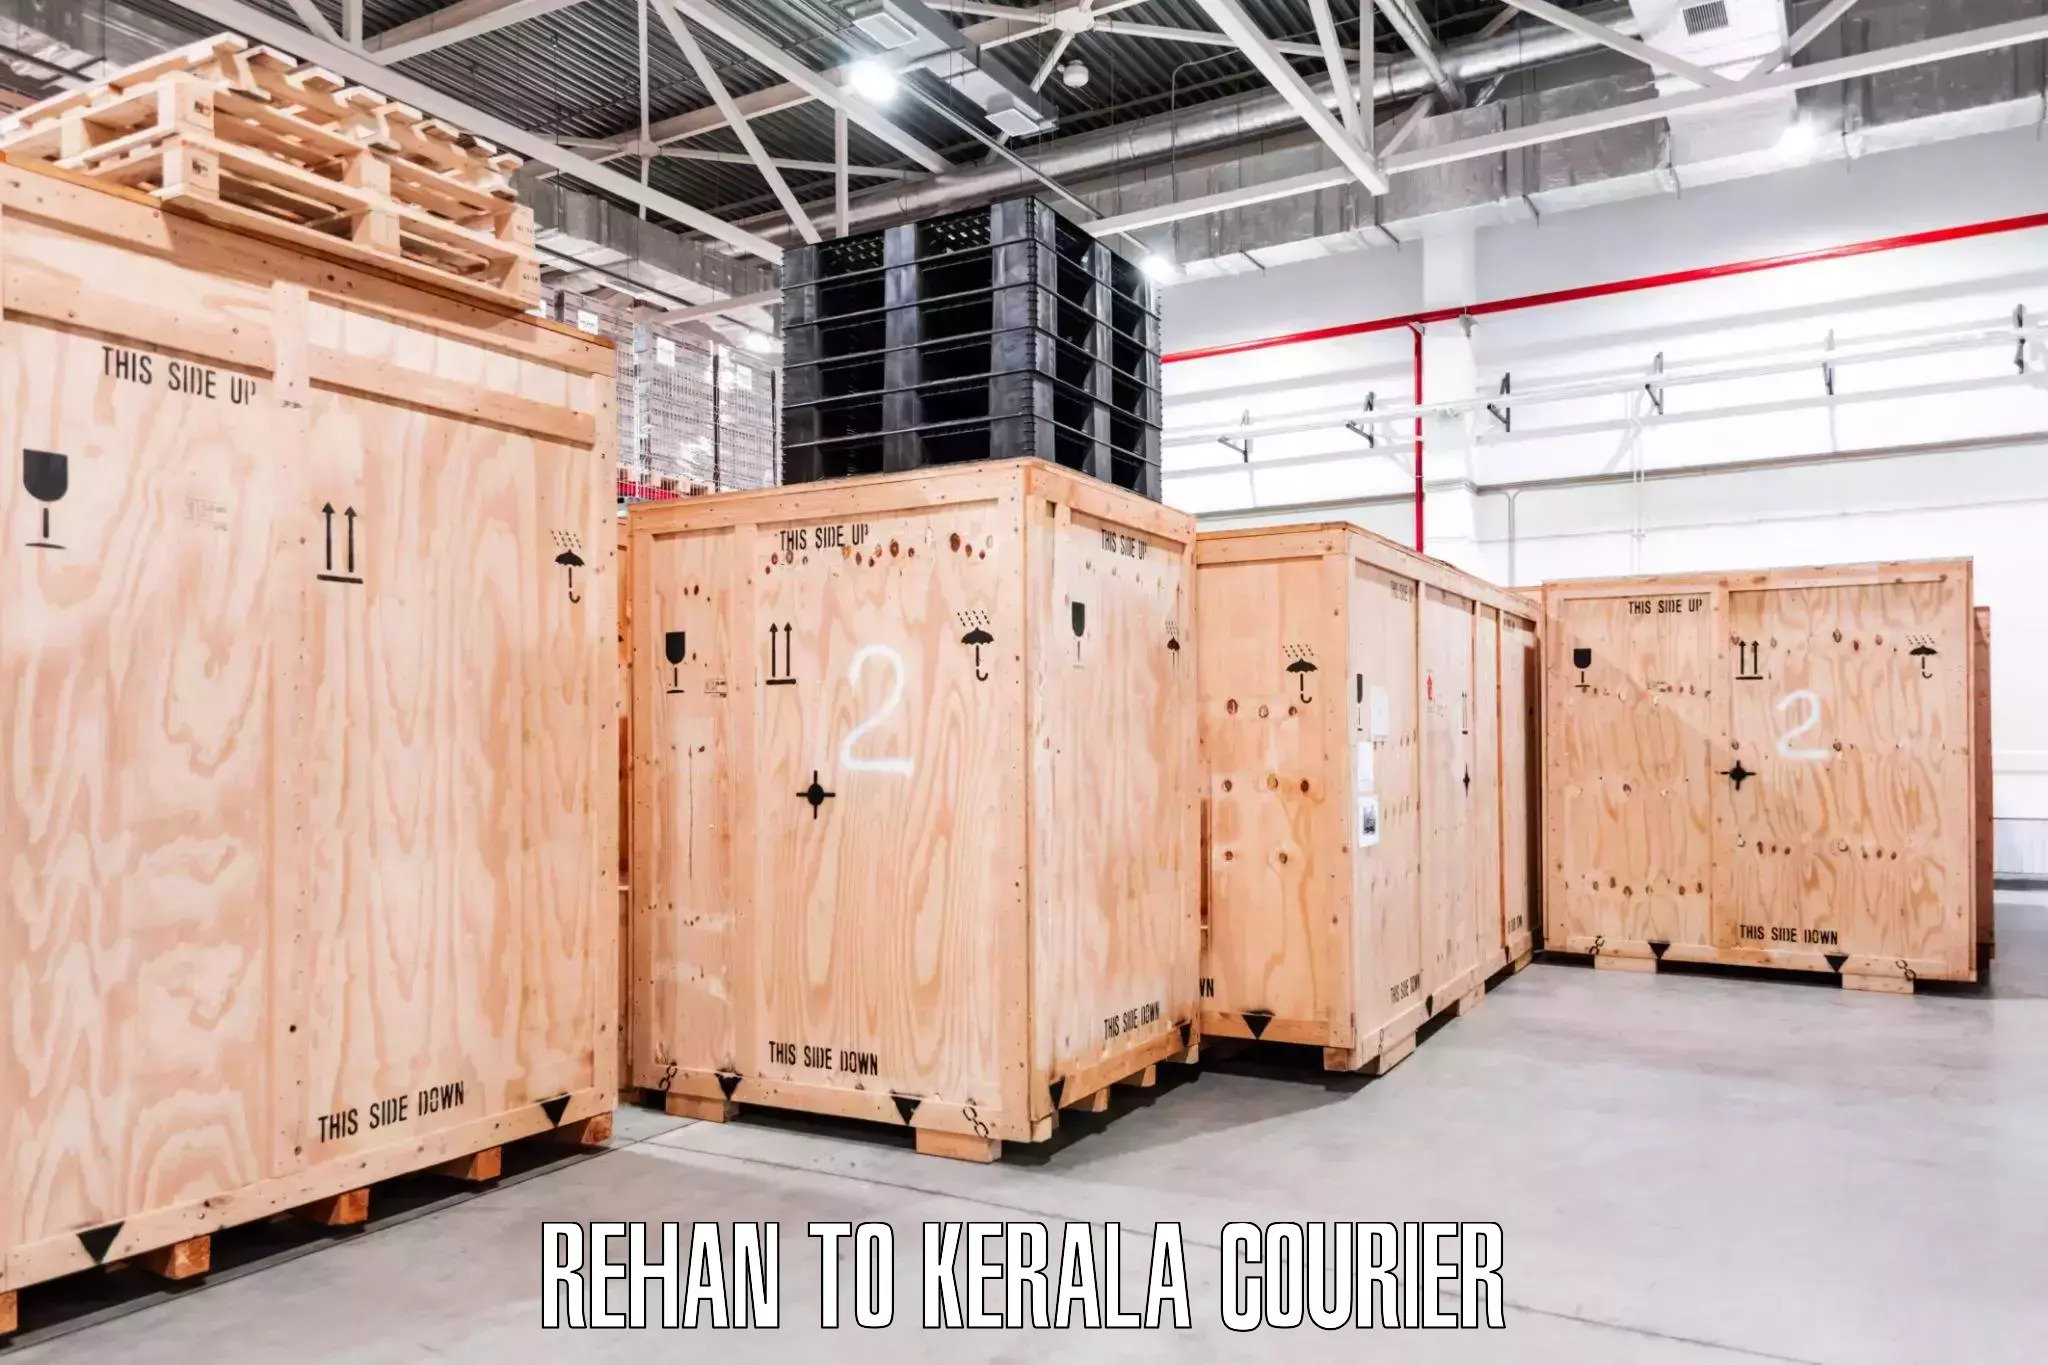 Trusted moving company Rehan to Kerala